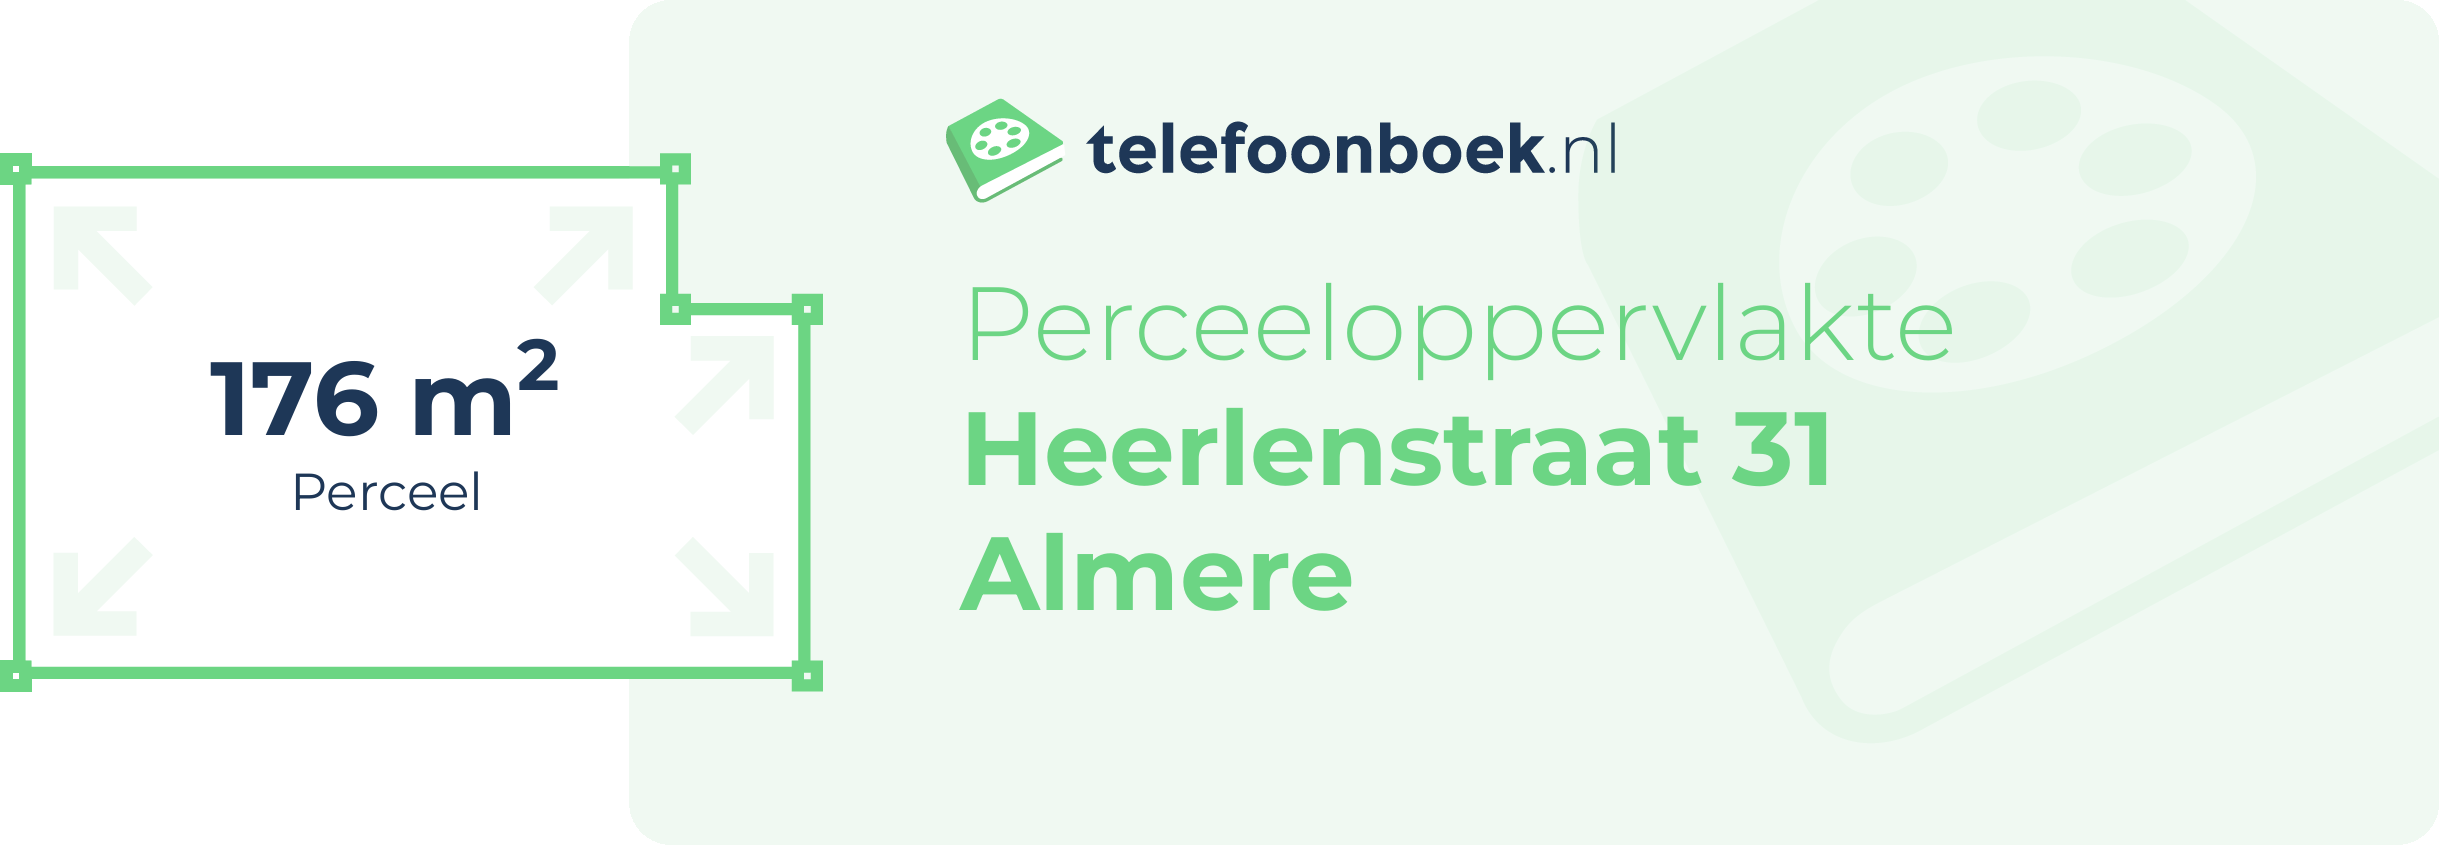 Perceeloppervlakte Heerlenstraat 31 Almere